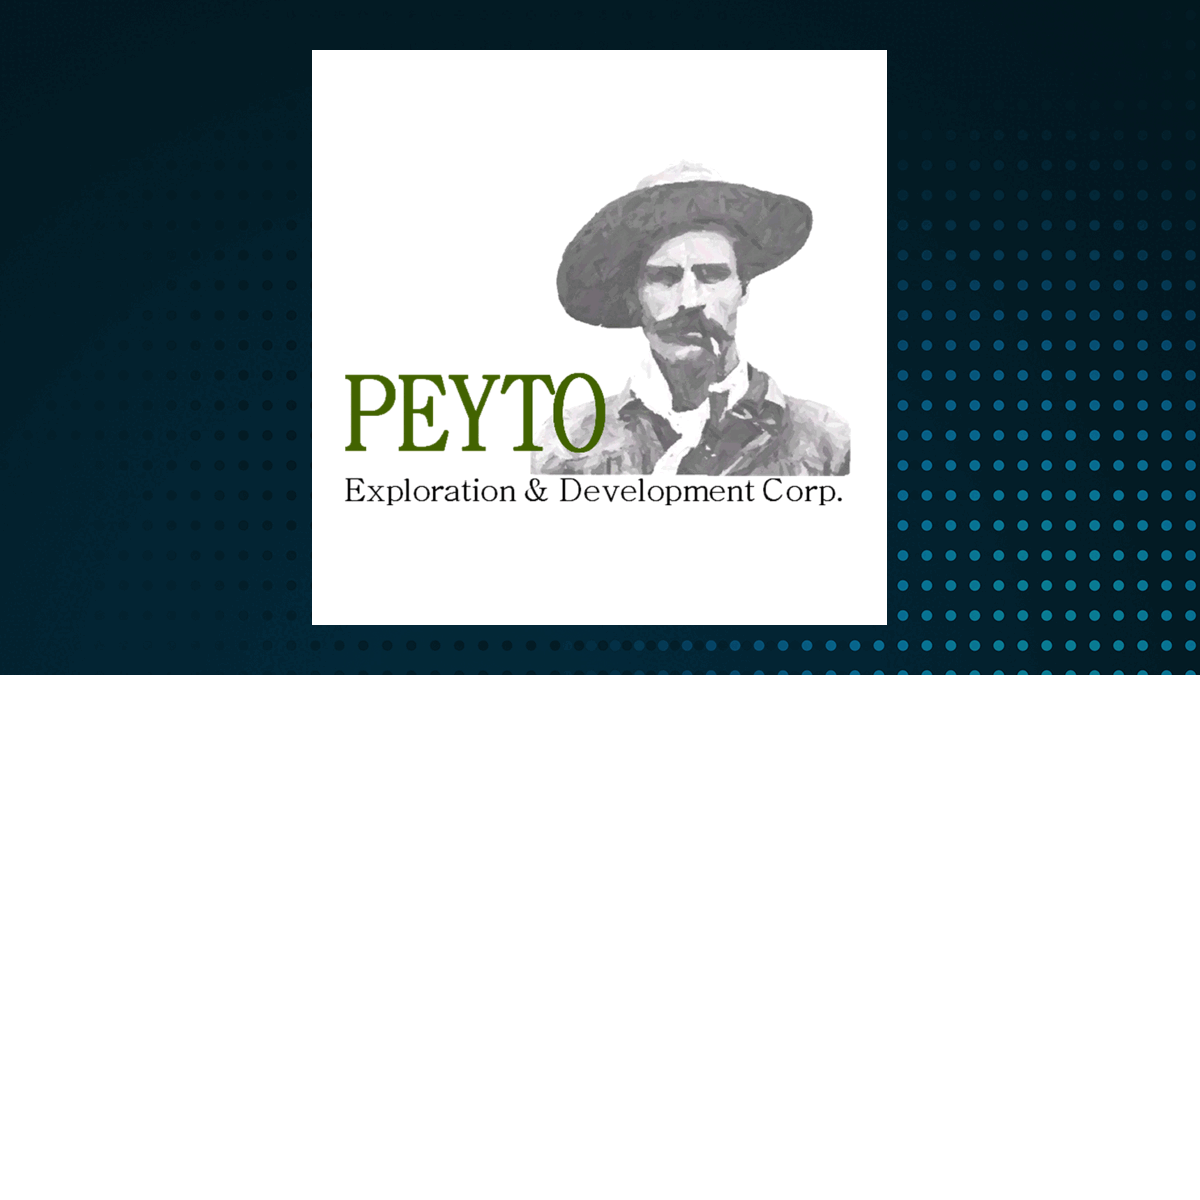 Peyto Exploration & Development logo with Energy background